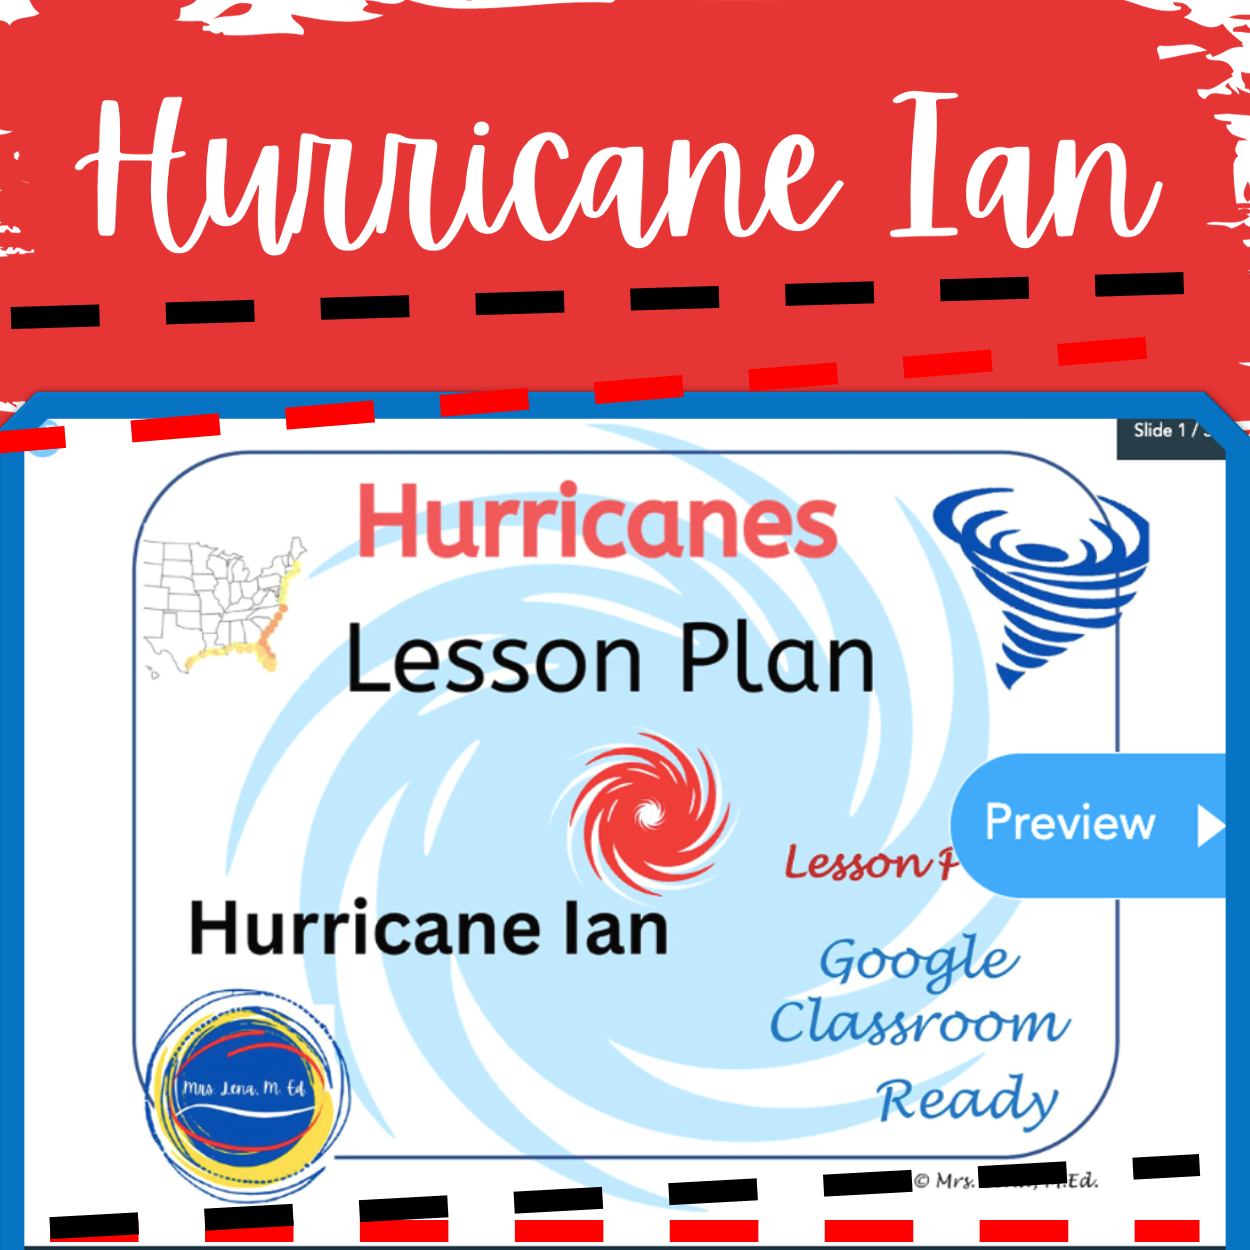 Teaching About Hurrican Ian Lesson Plan